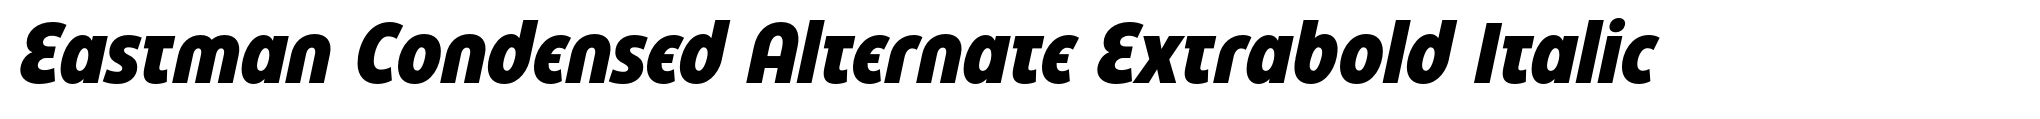 Eastman Condensed Alternate Extrabold Italic image